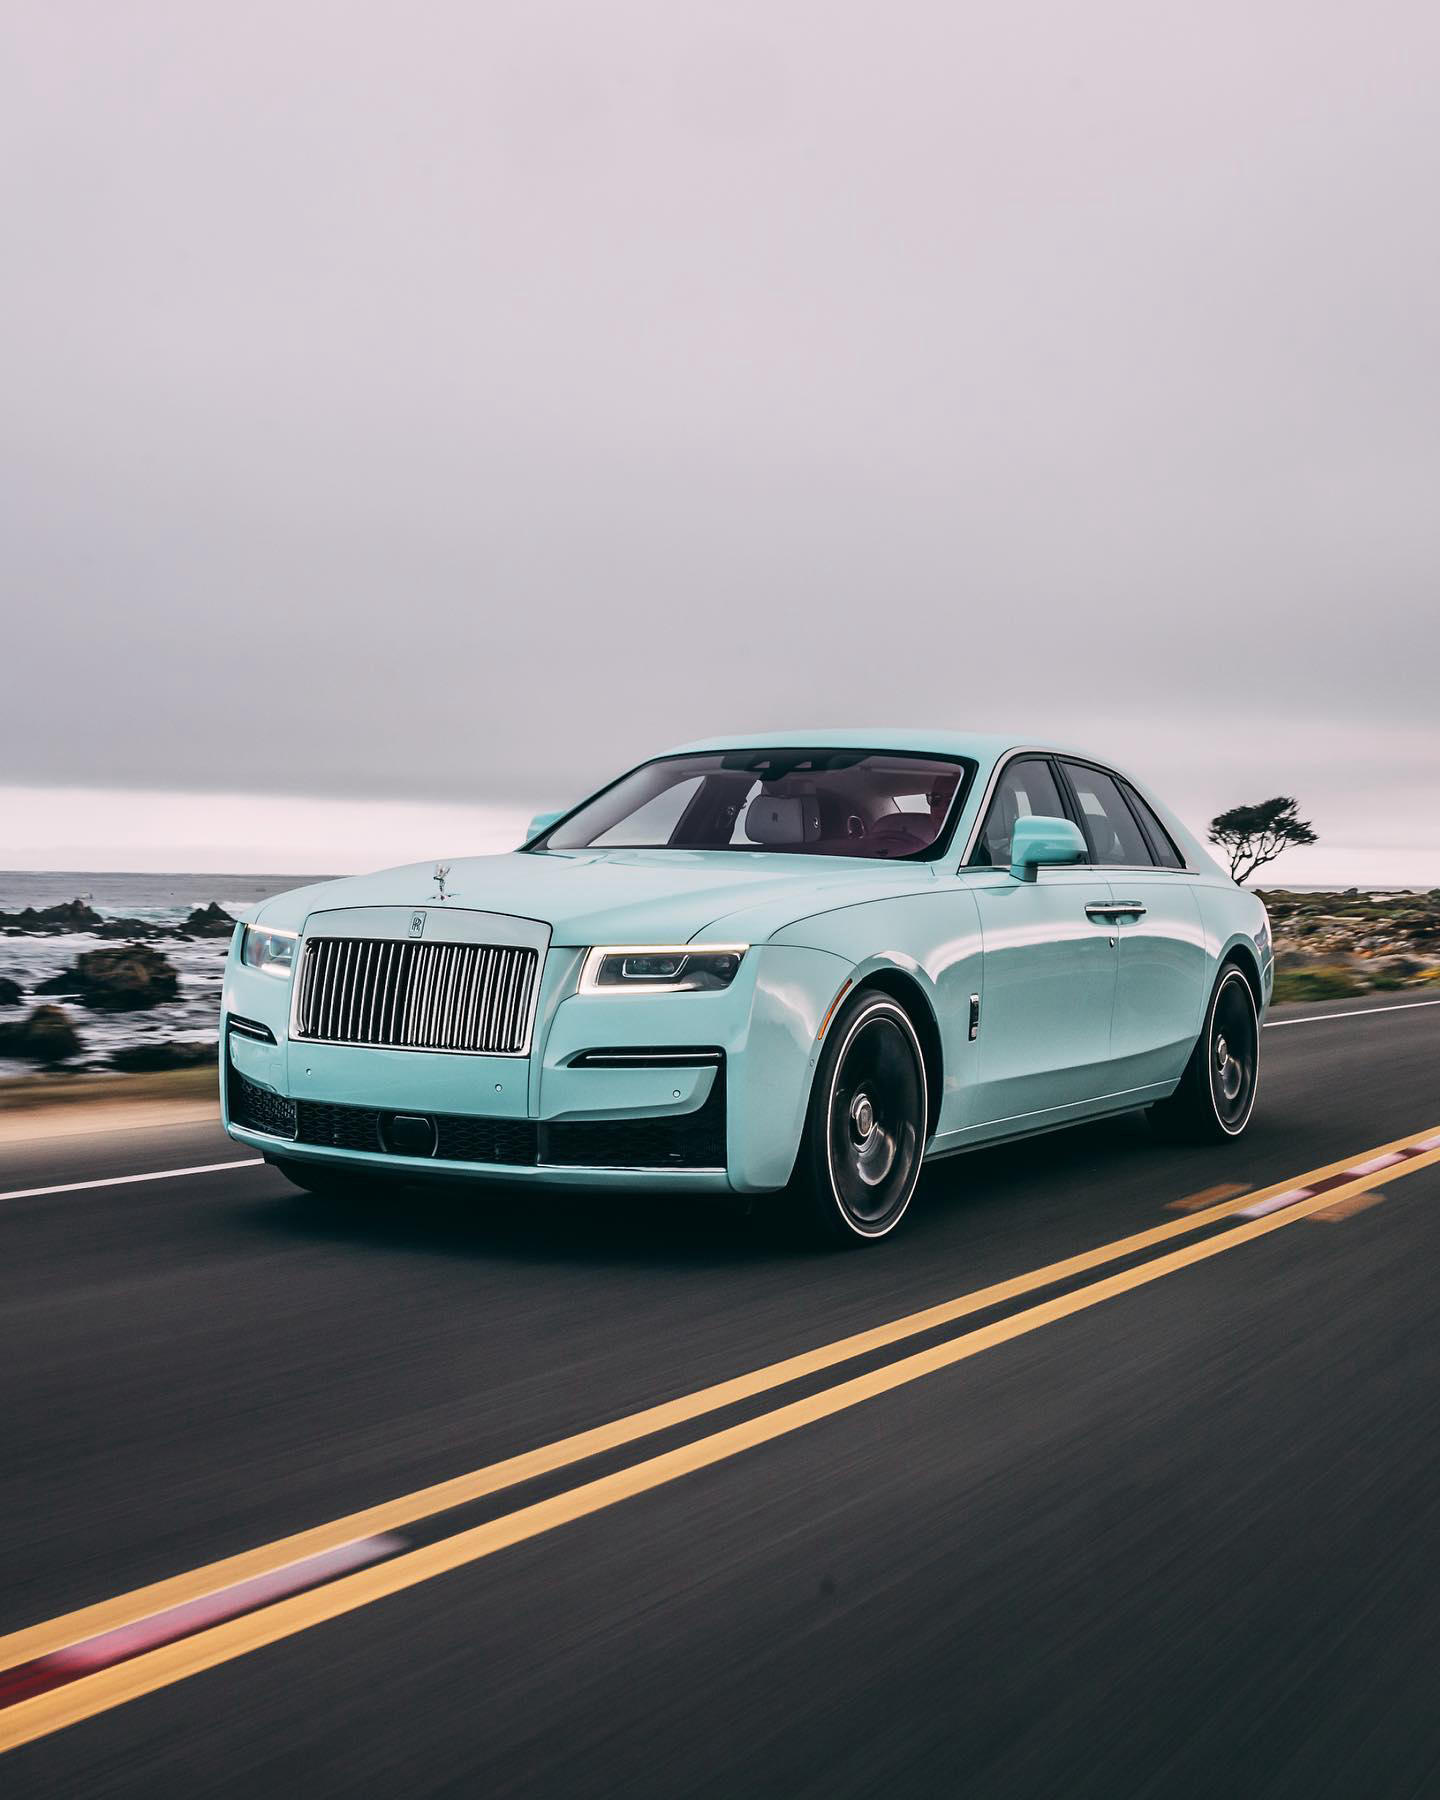 image  1 Rolls-Royce Motor Cars - Revealed during Monterey Car Week, this #Bespoke #RollsRoyceGhost from the